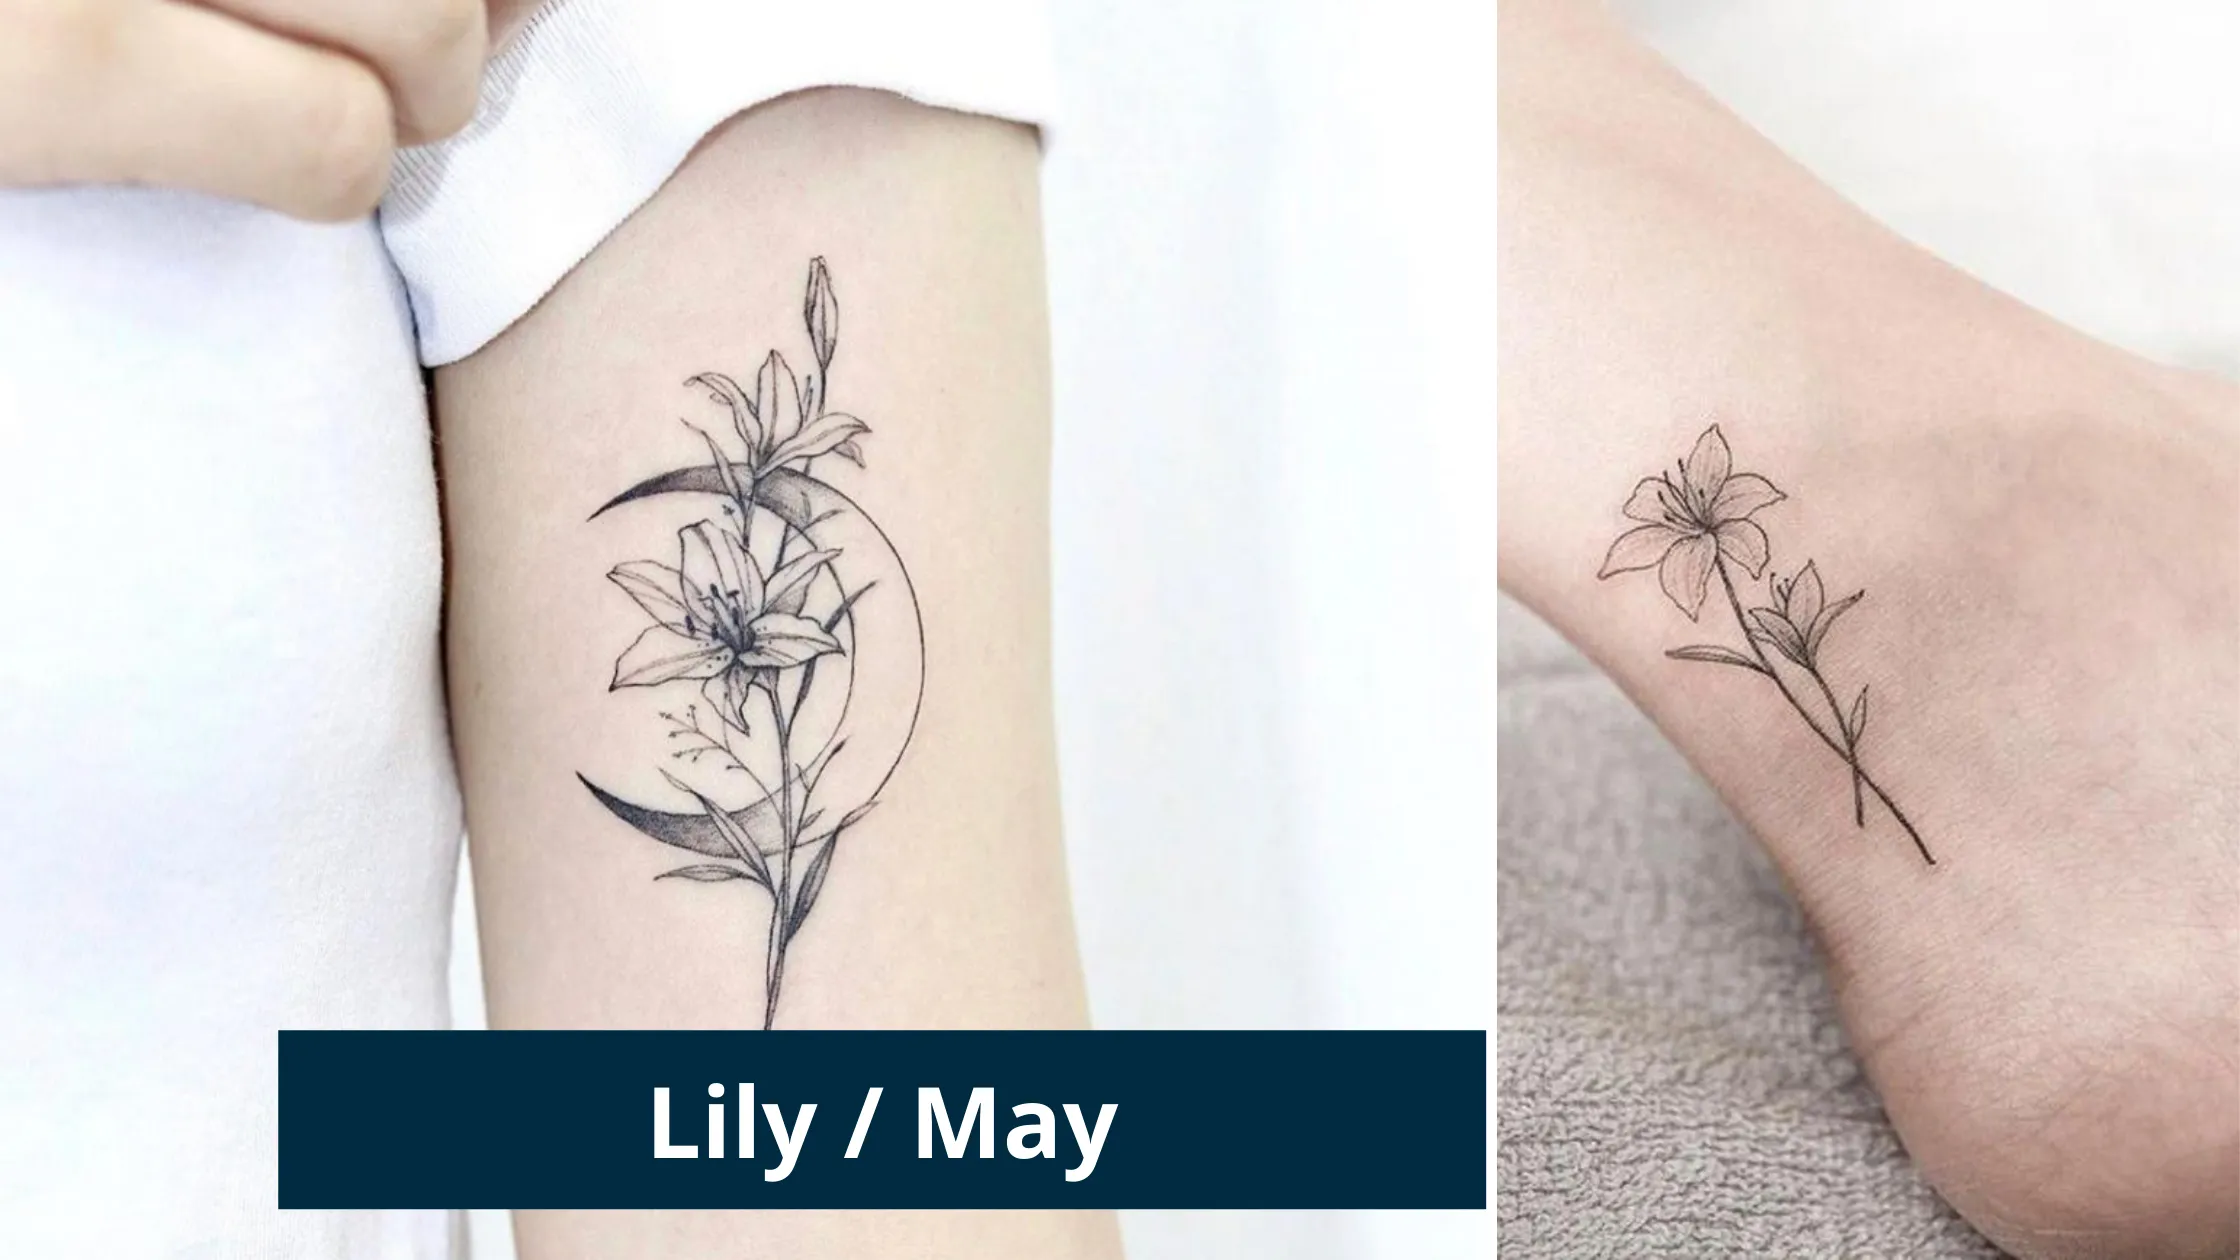 Birth flowers tattoo ideas 2021 - Lily May